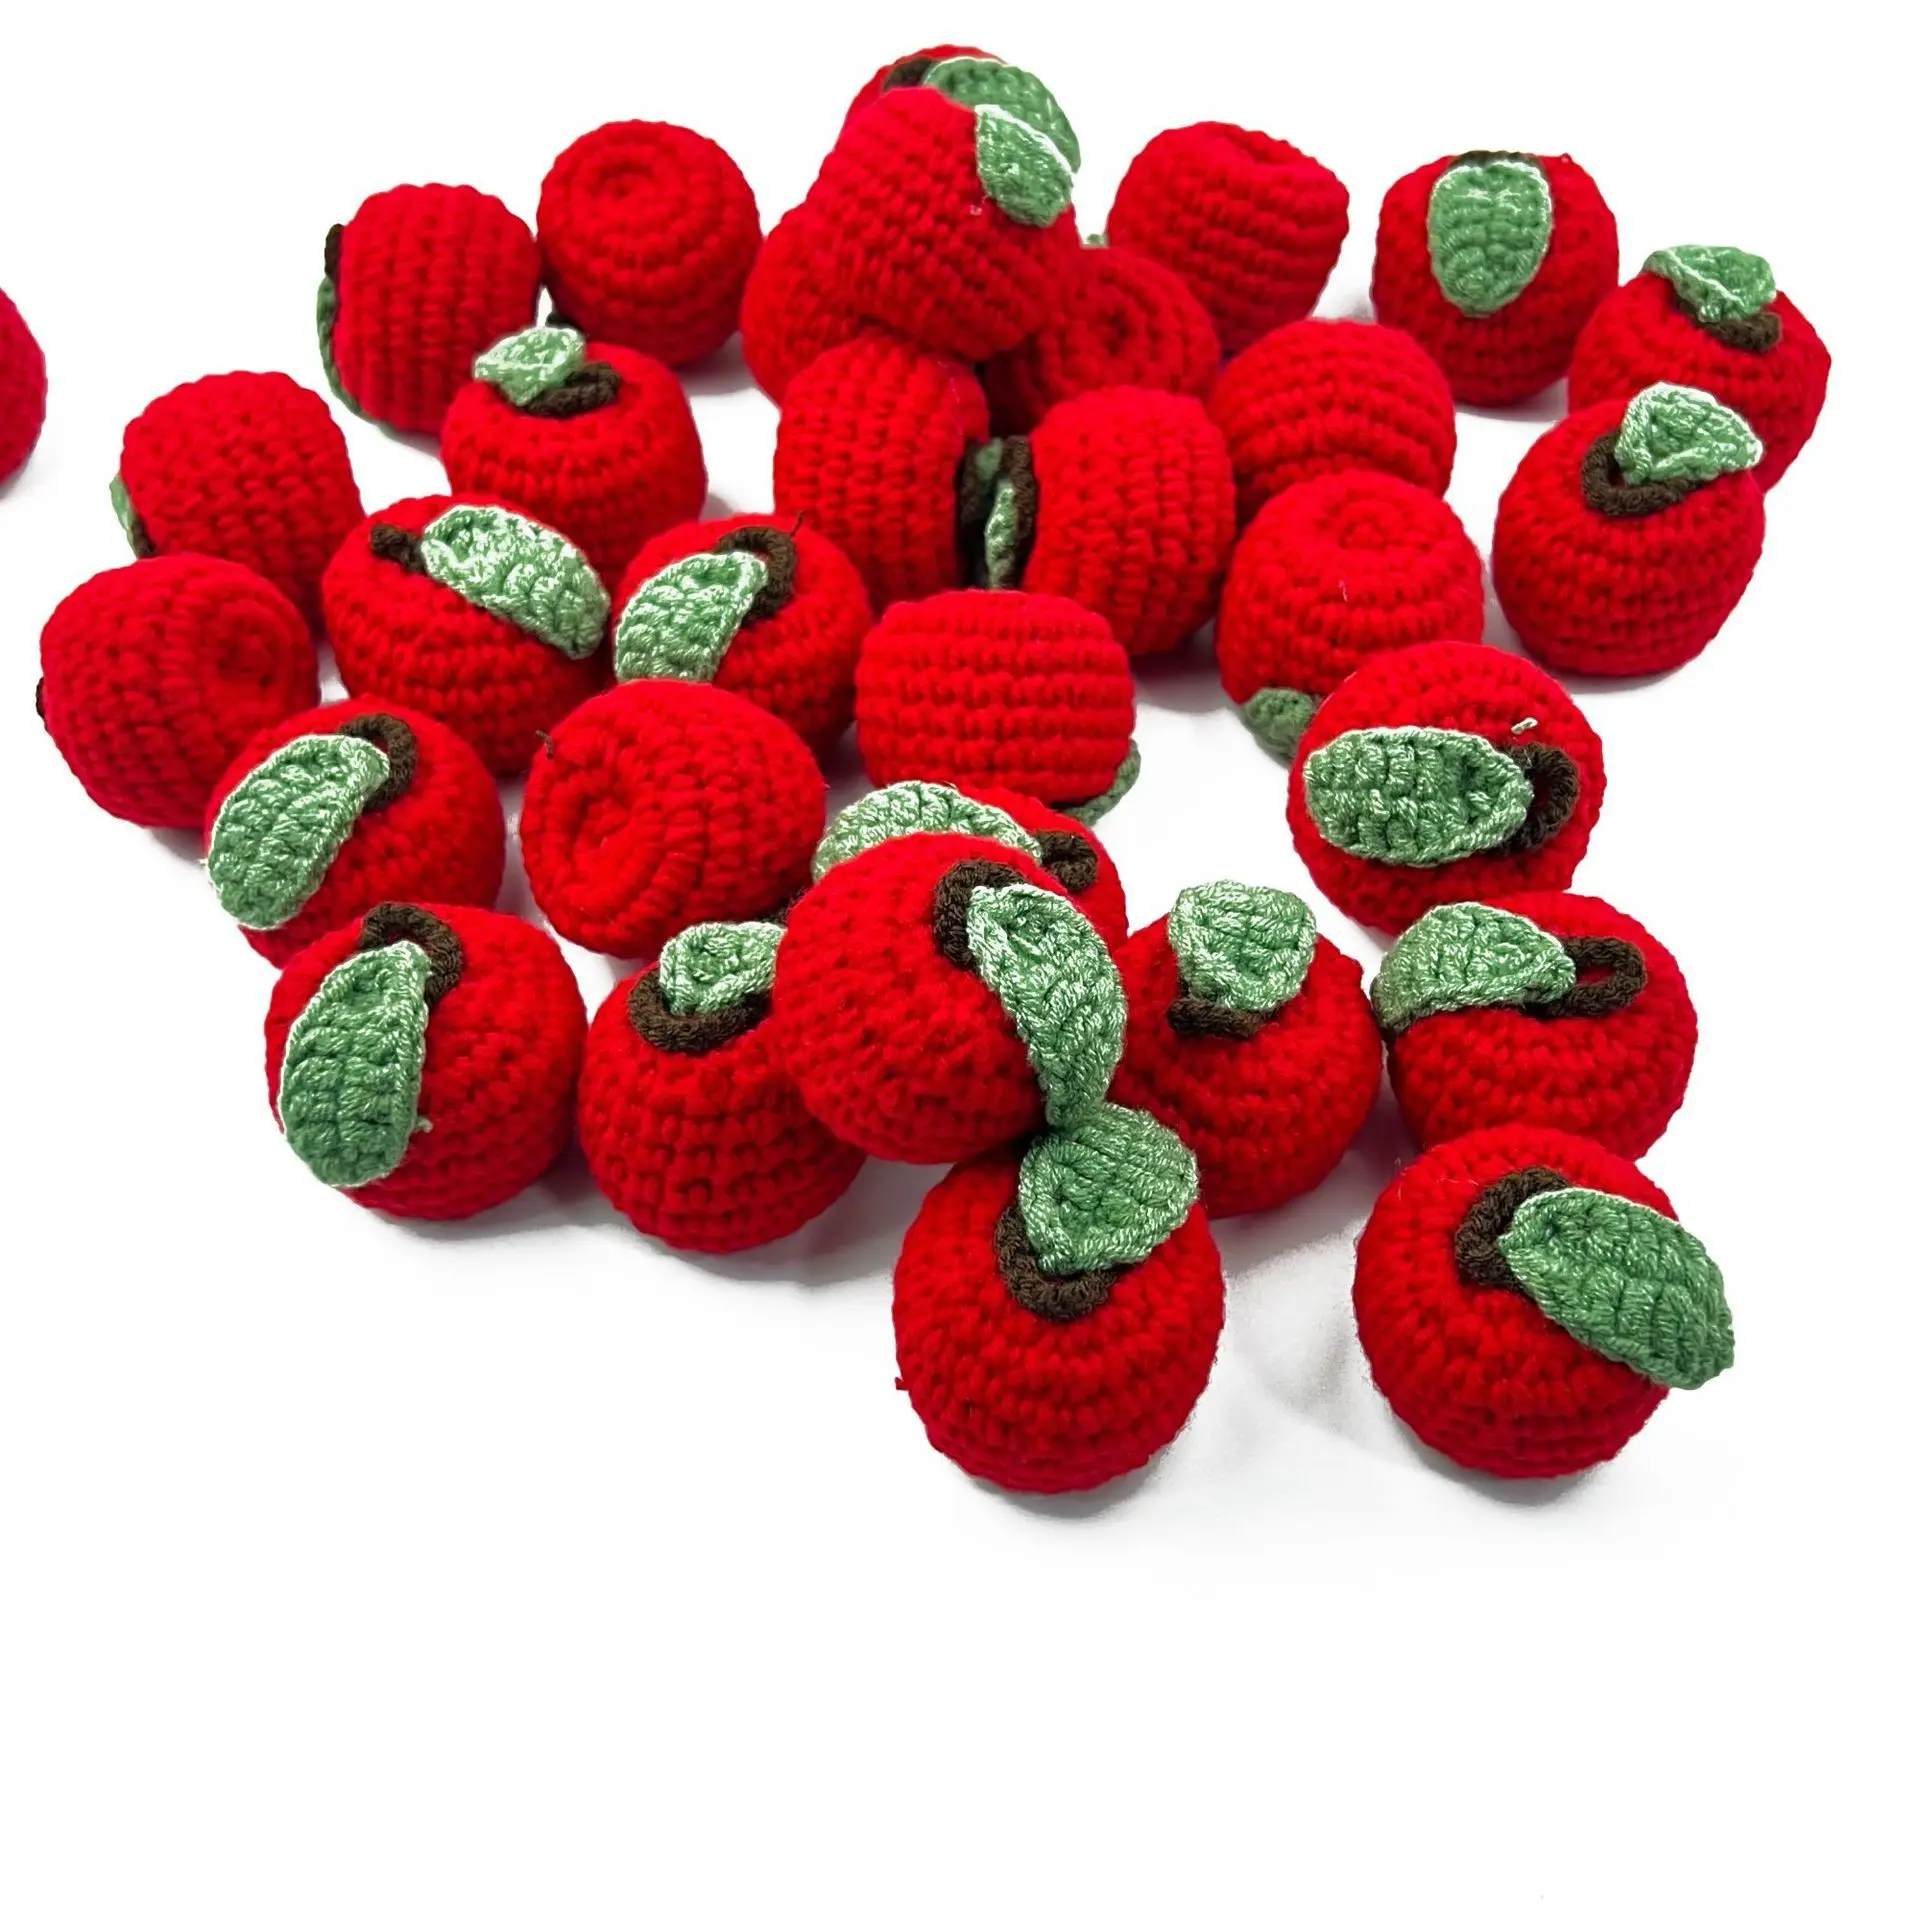 Spot wholesale handmade crochet items Cute Cartoon crochet fruit Creative crochet amigurumi